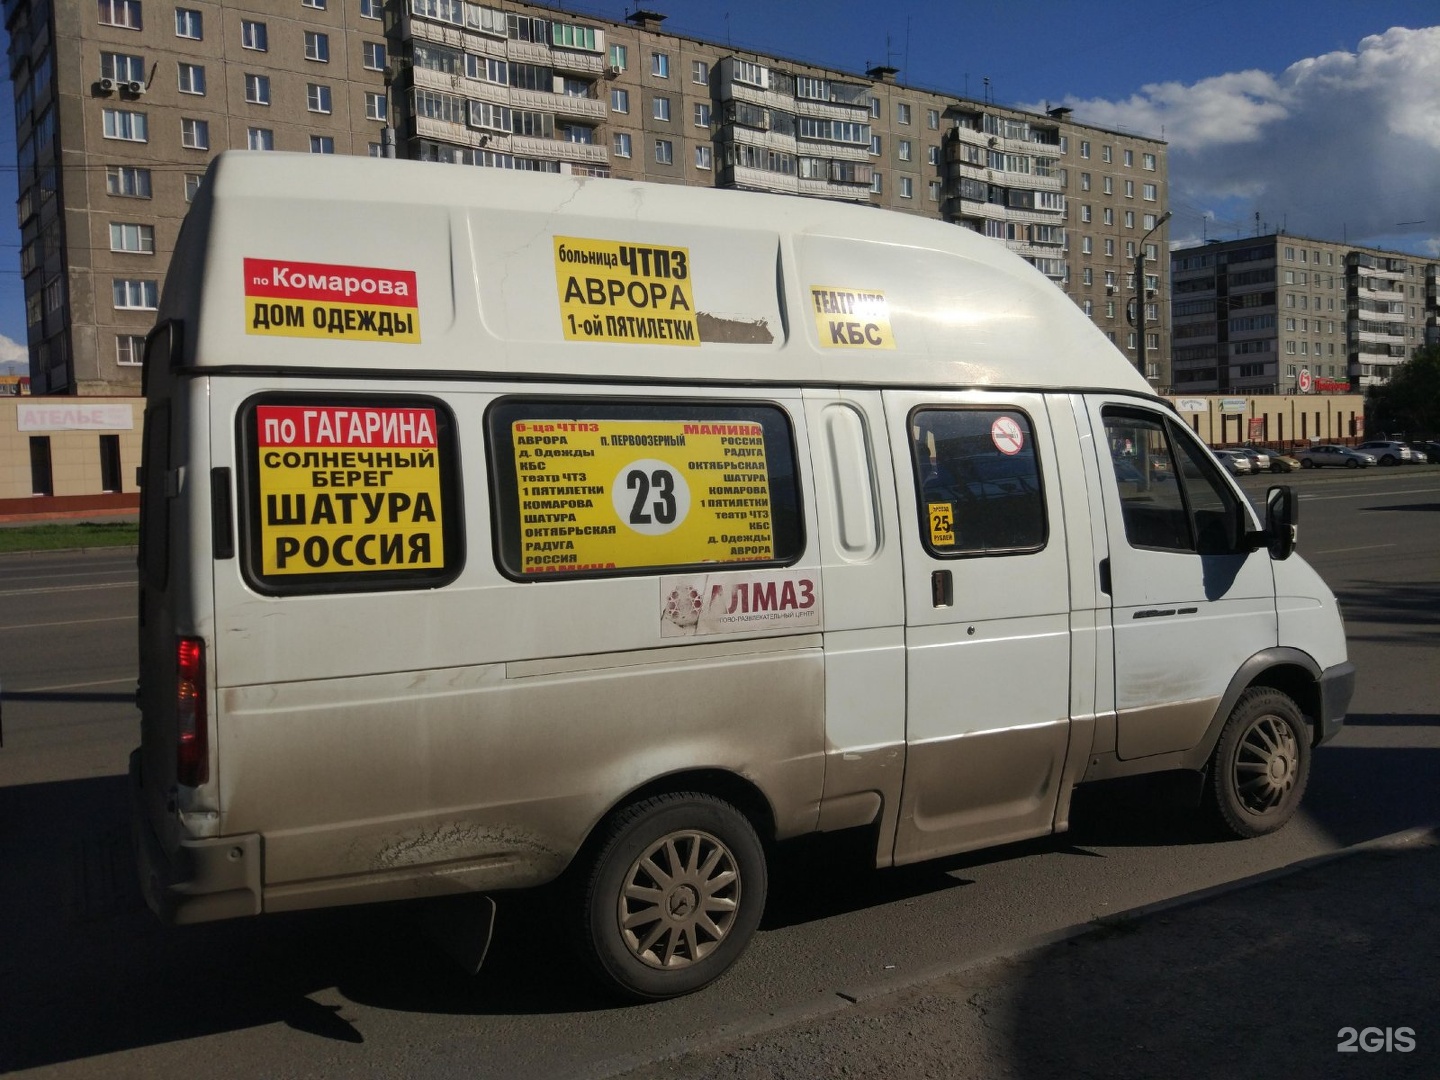 Маршрутное такси какой номер. Маршрутка. Маршрутное такси Челябинск. К32 маршрутное такси. Челябинское маршрутное такси.